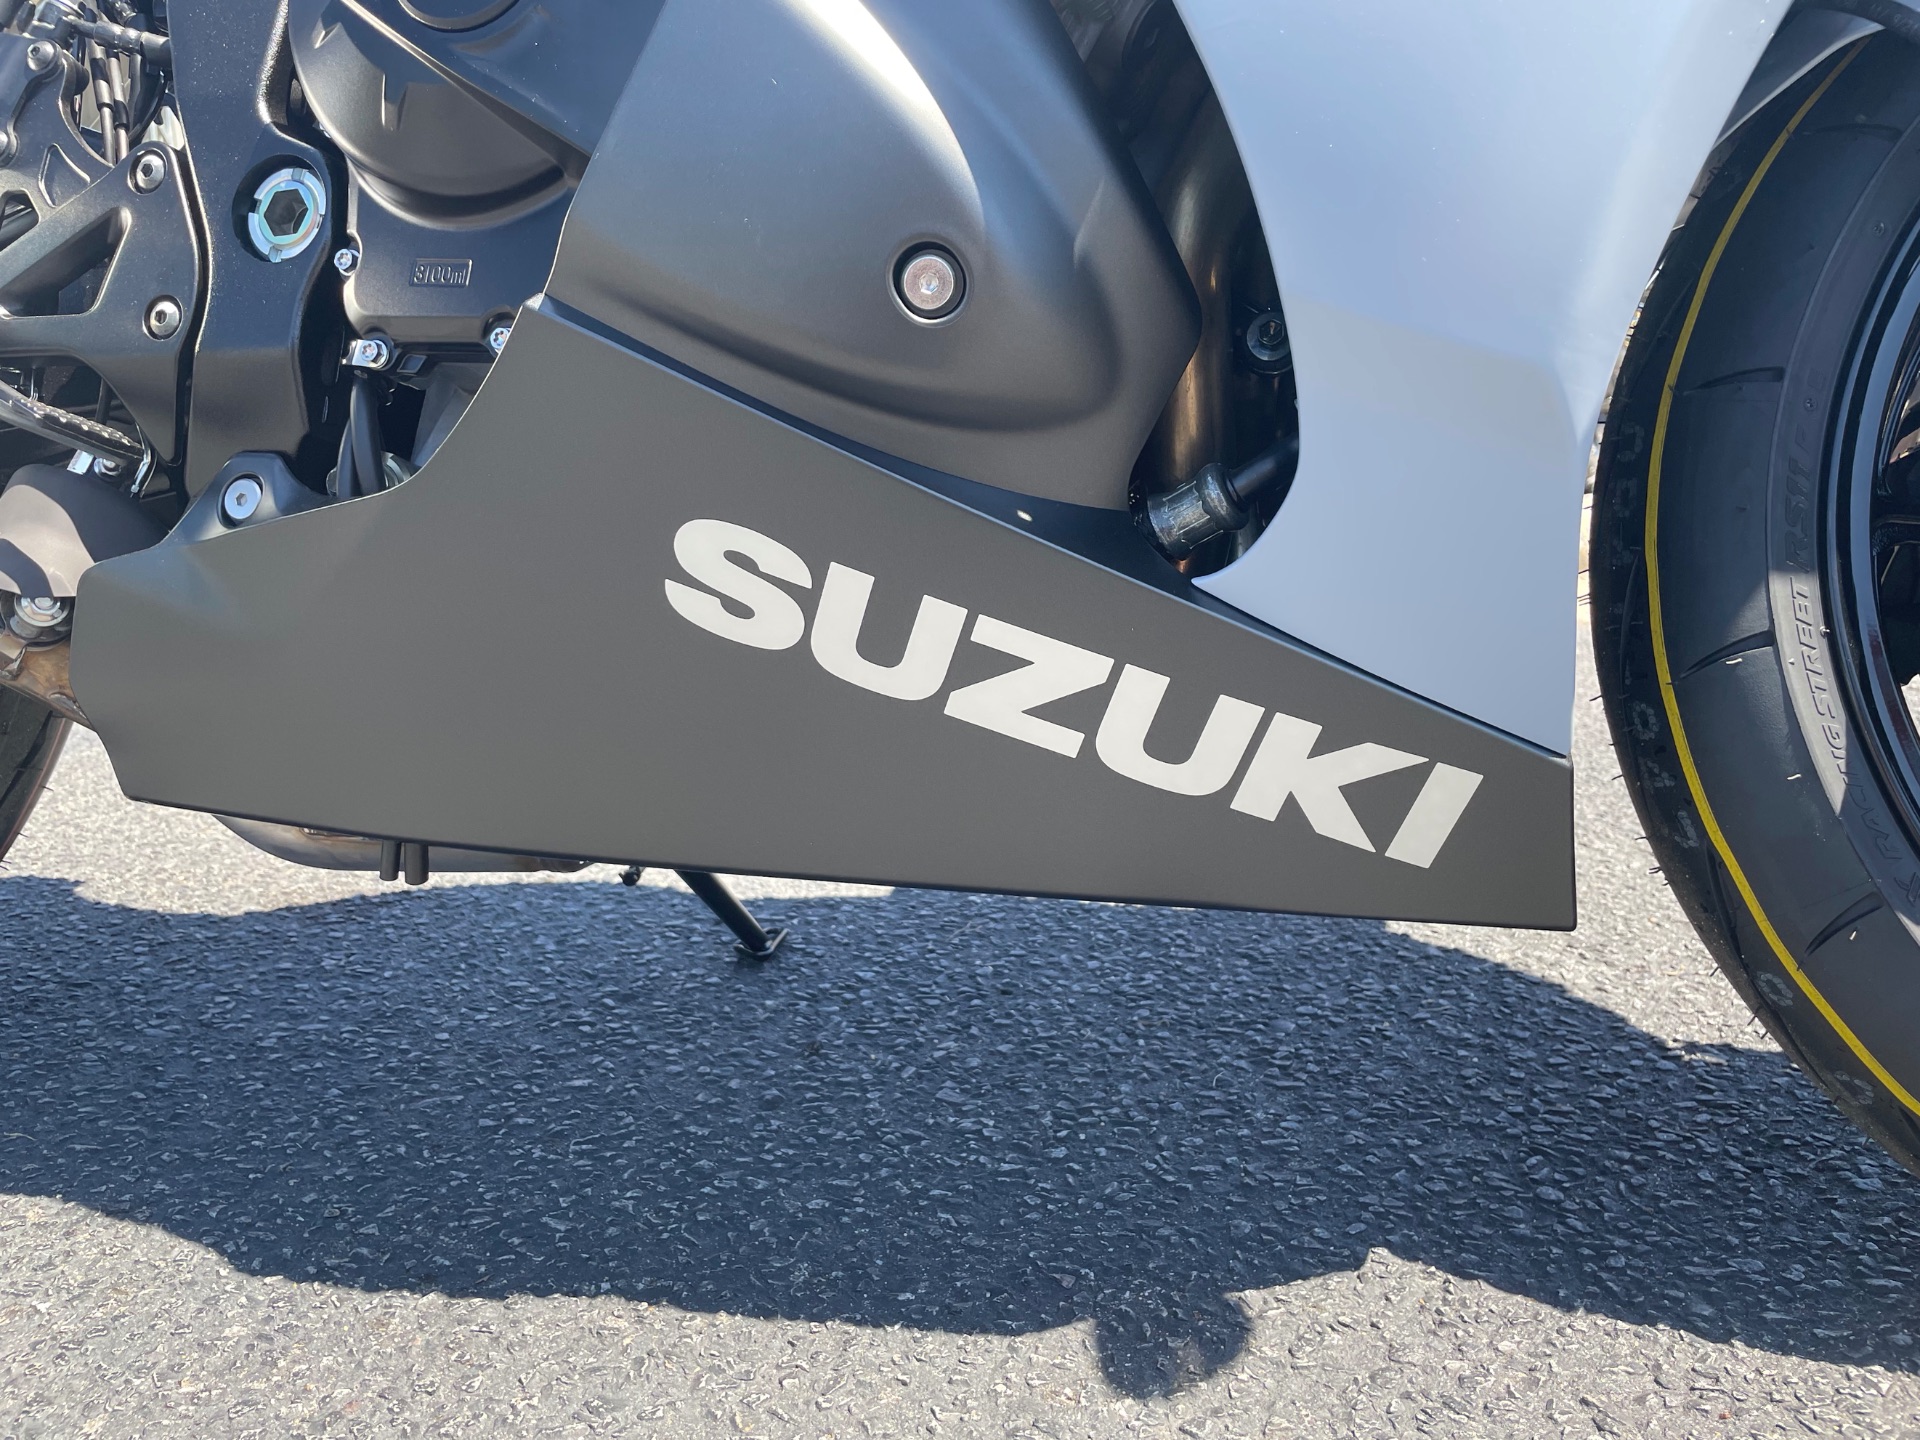 2022 Suzuki GSX-R1000R in Greenville, North Carolina - Photo 16